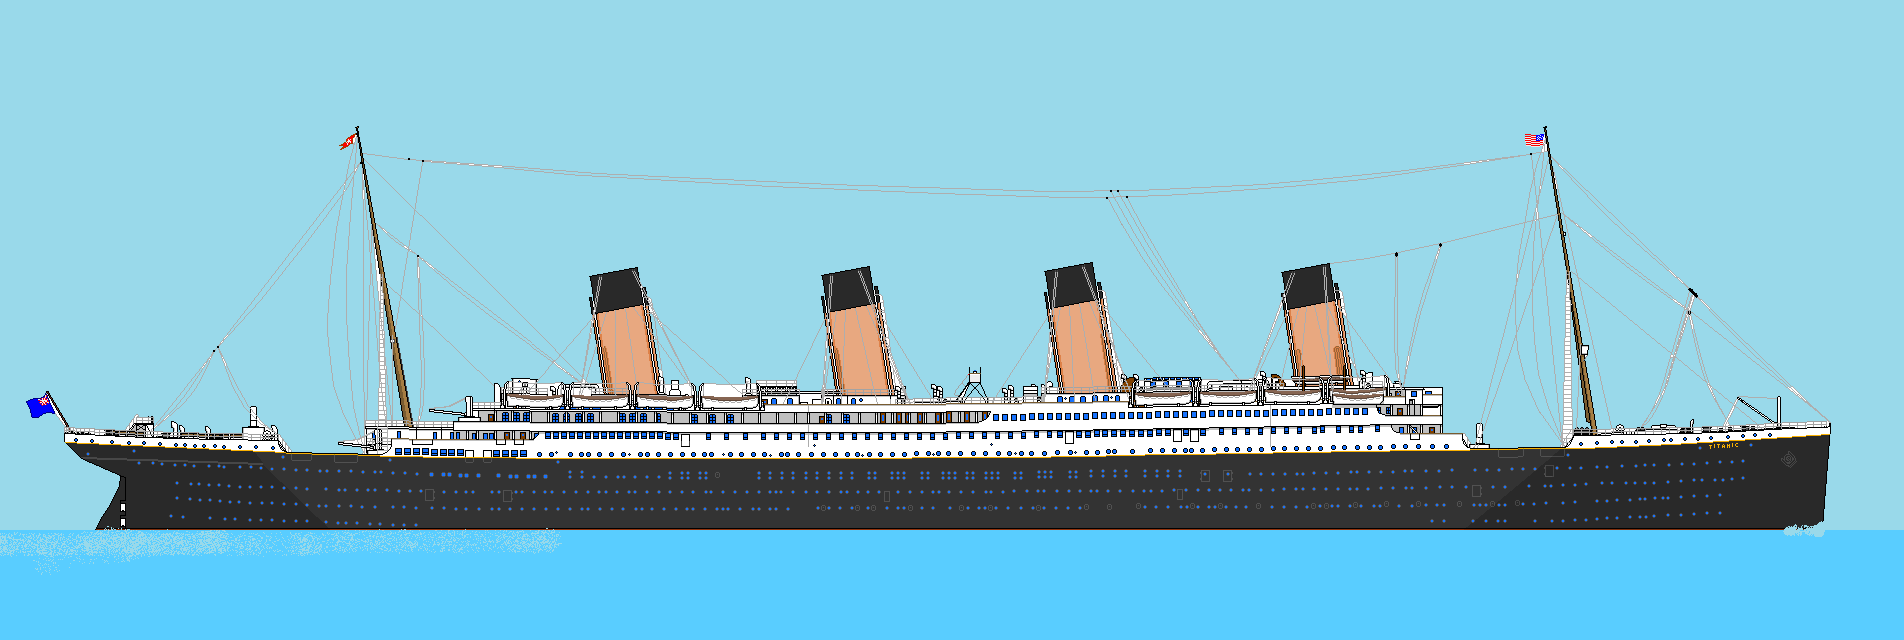 R M S Titanic Stephenpedia Wikia Fandom Powered By Wikia - r m s titanic at sea